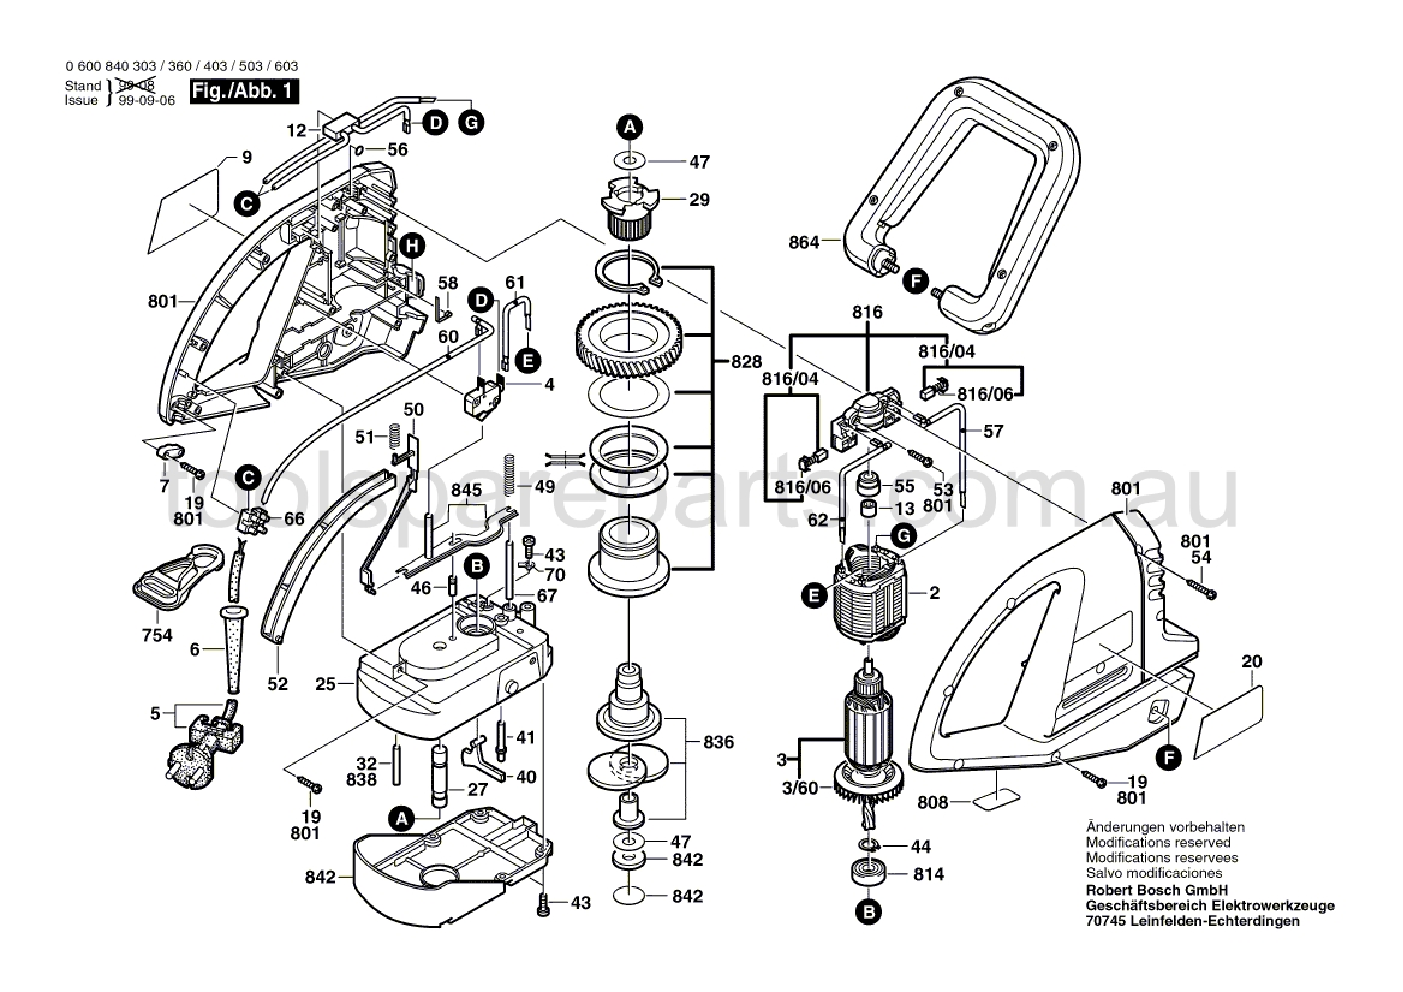 Bosch AHS 600-34 0600840537  Diagram 1